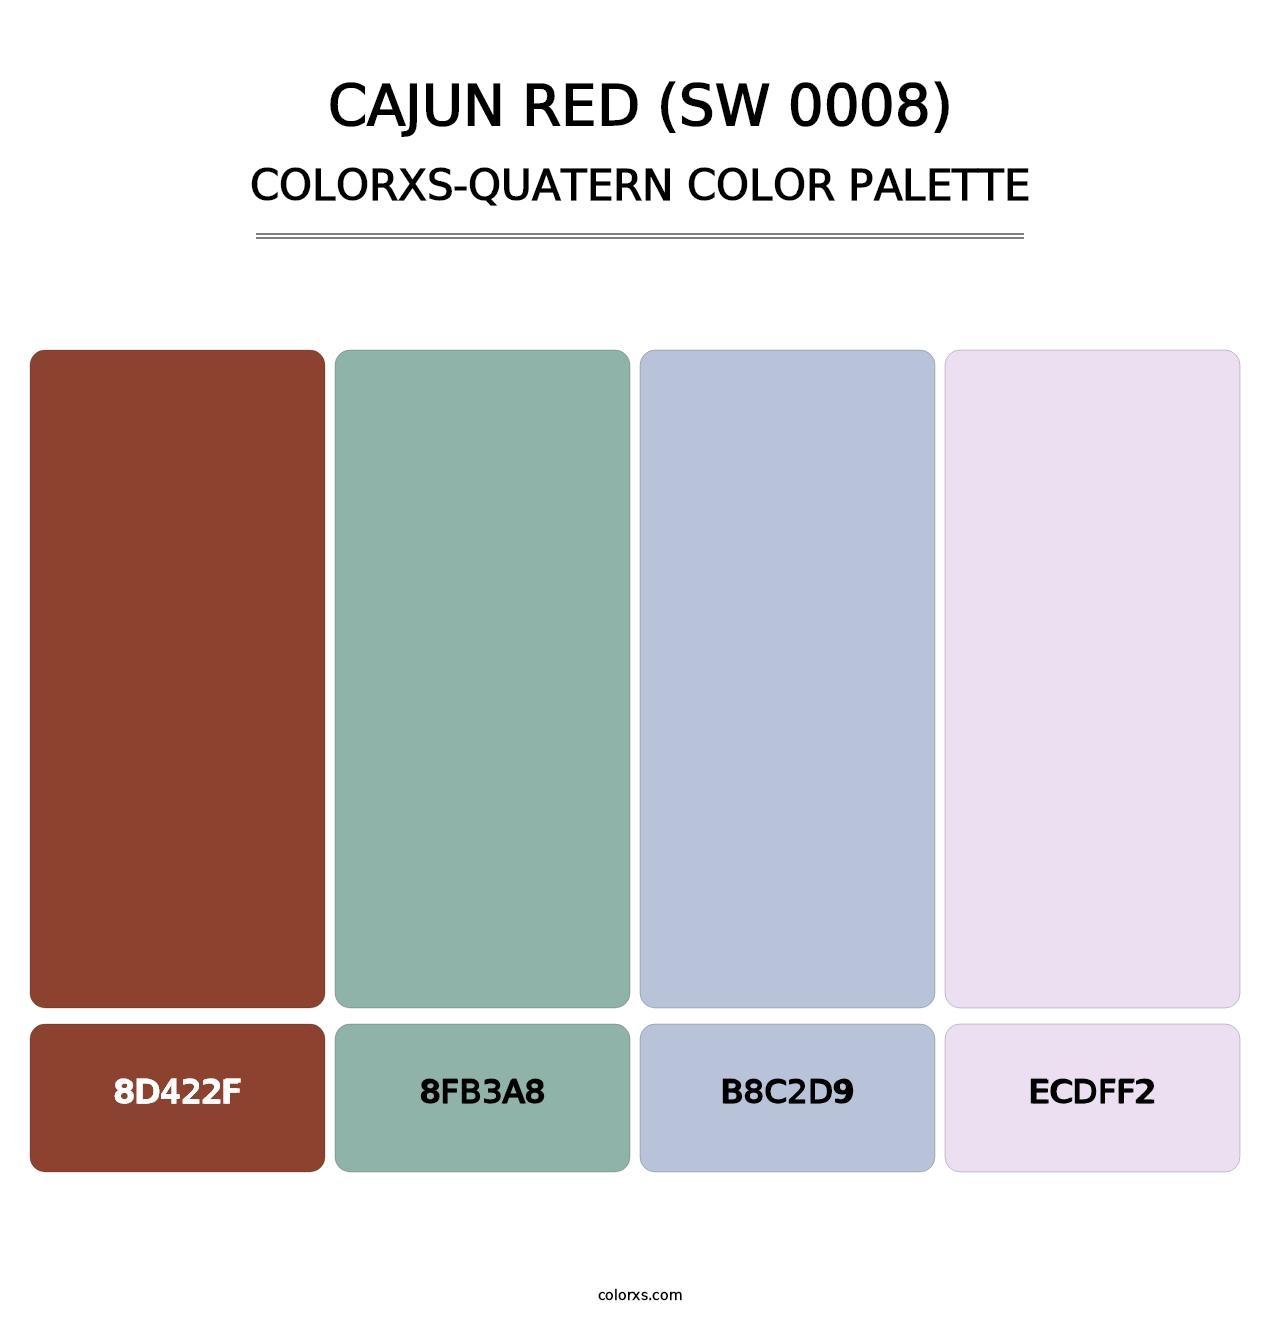 Cajun Red (SW 0008) - Colorxs Quatern Palette